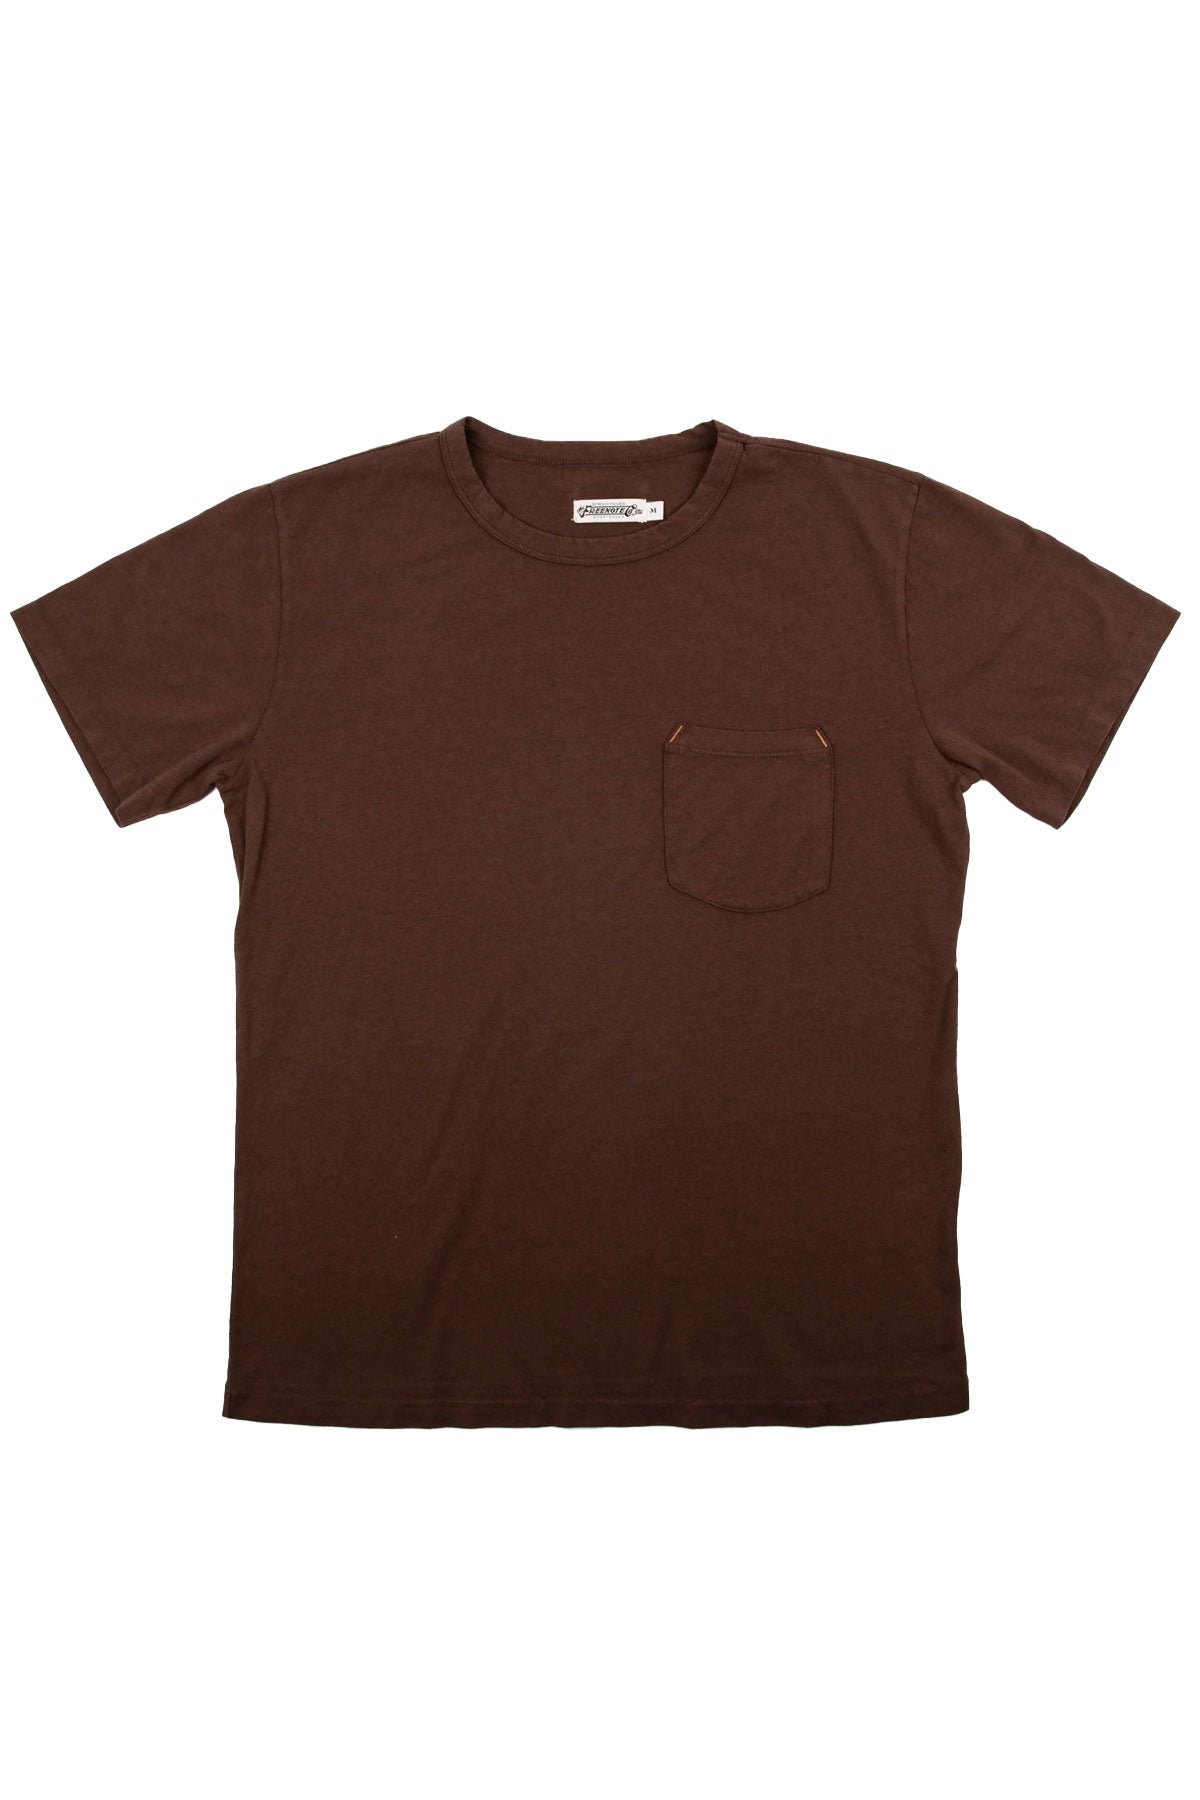 9 Oz Pocket T-Shirt